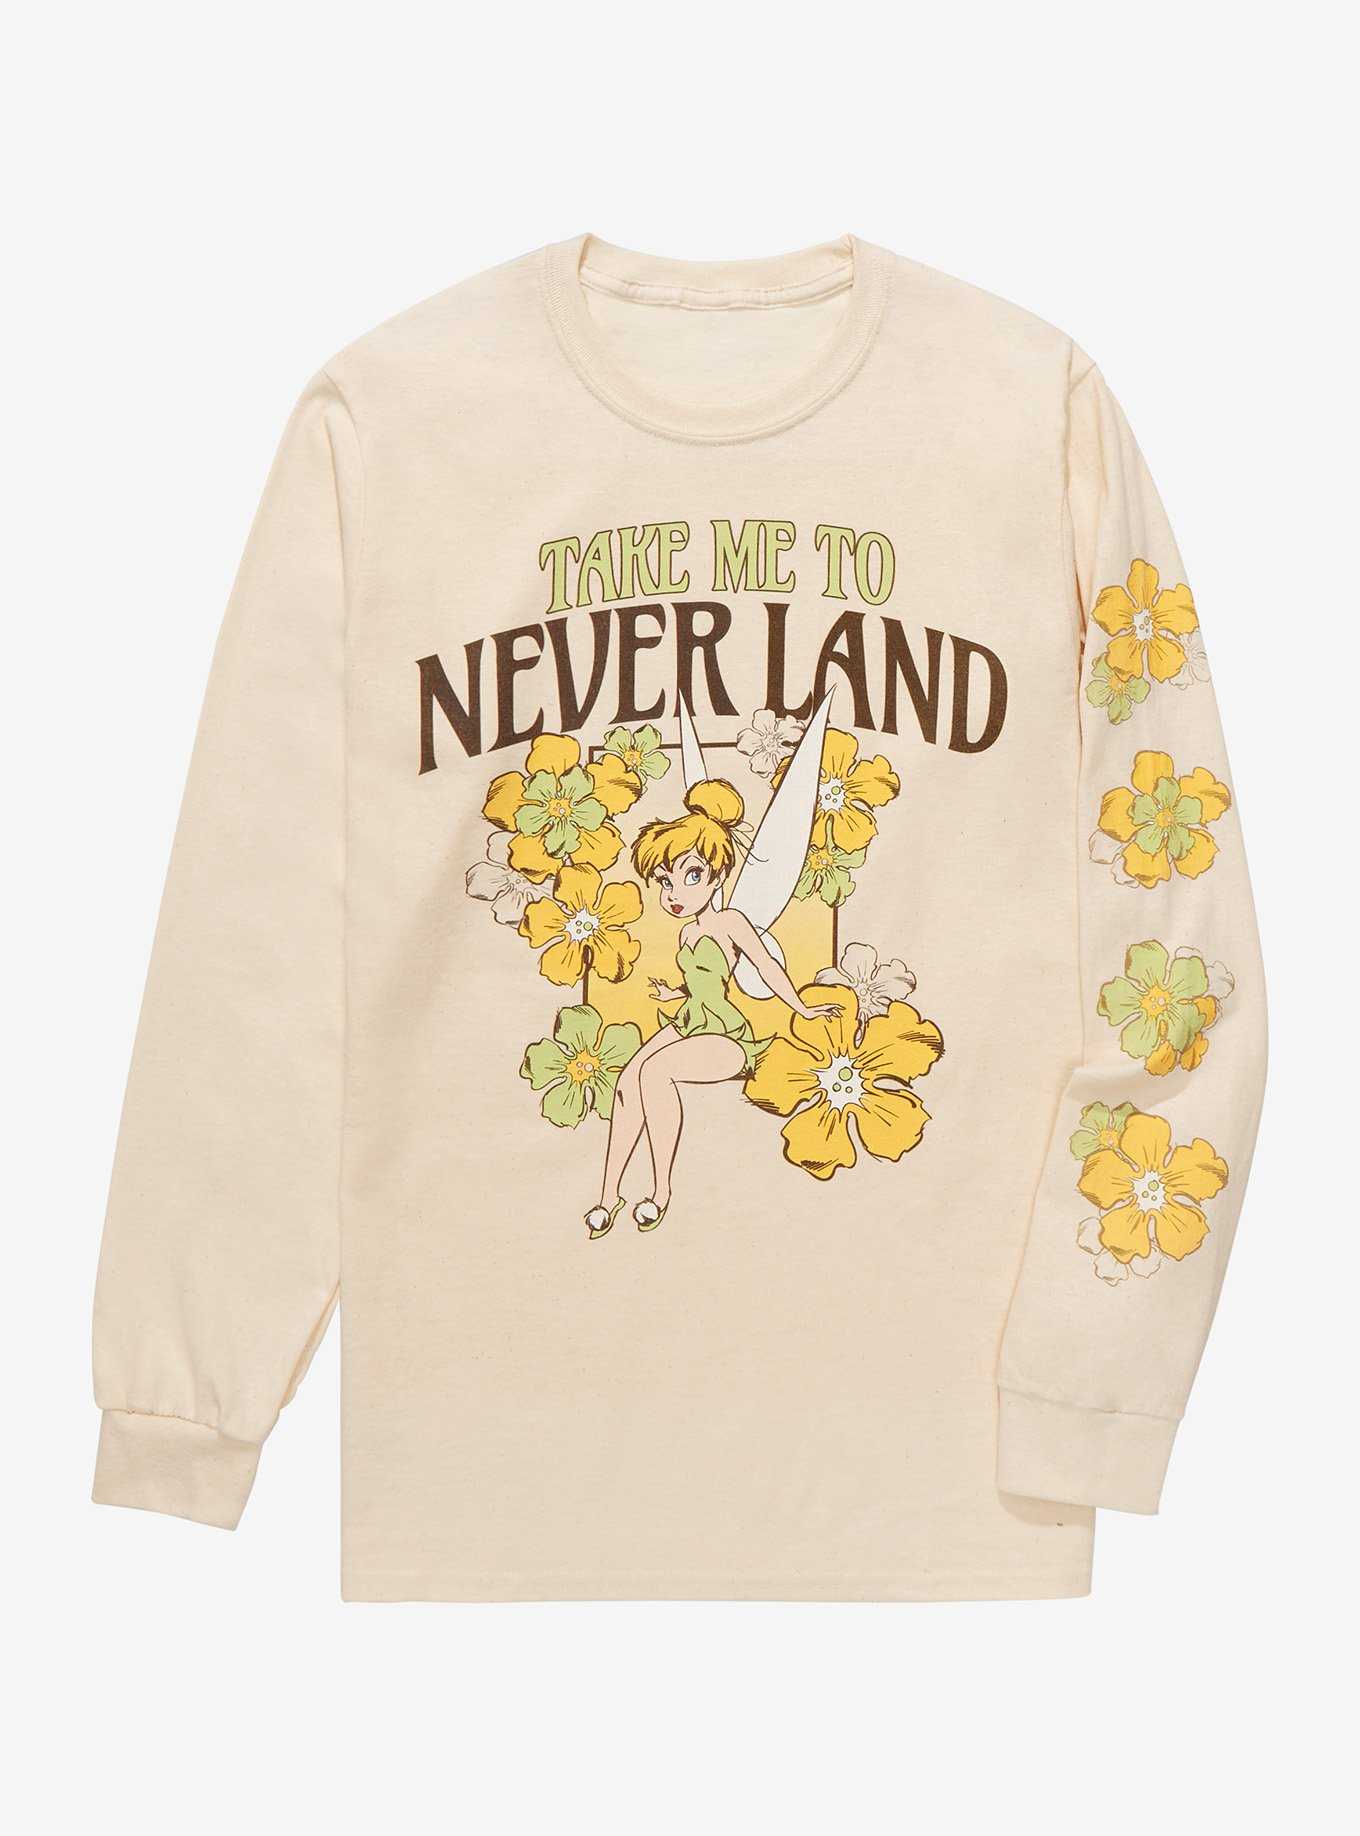 Tinker BoxLunch T-Shirt Bell Pan BoxLunch | - Peter Disney Sleeve Long Exclusive Neverland